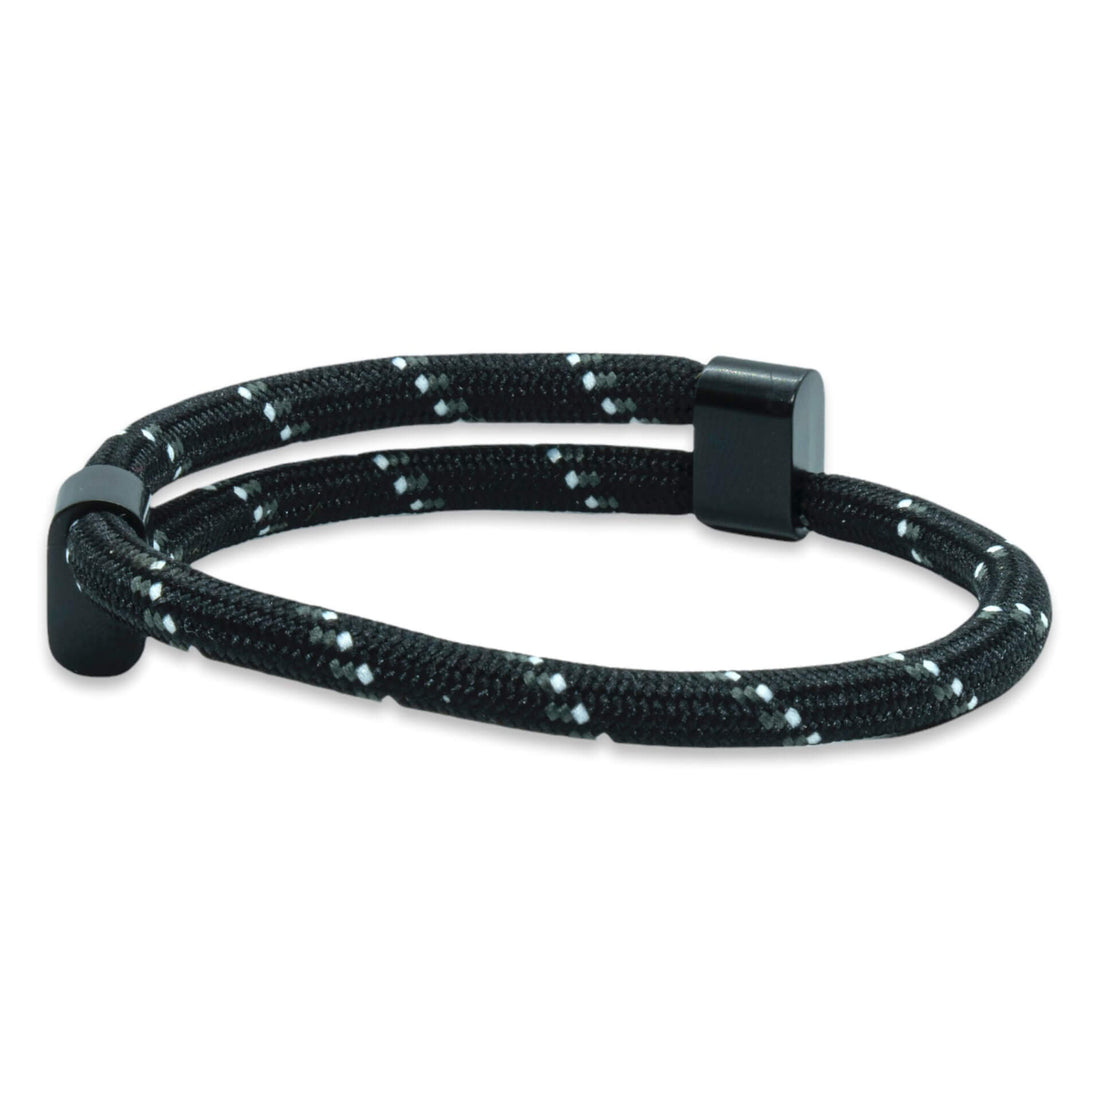 Adjustable rope - Sport black